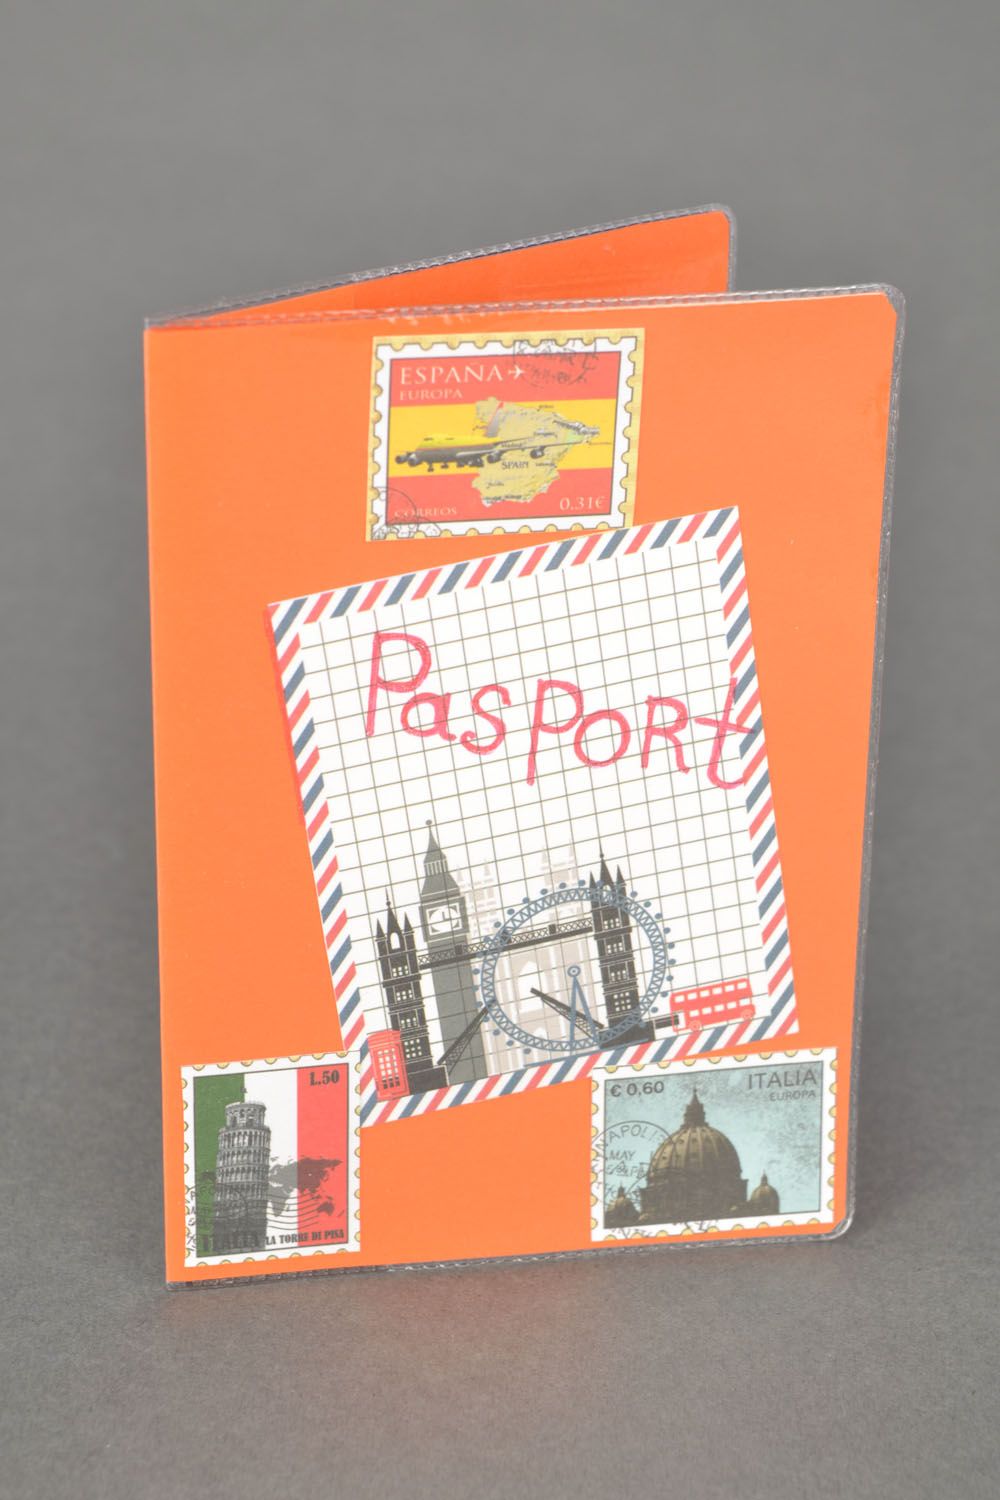 Cover for international passport photo 1